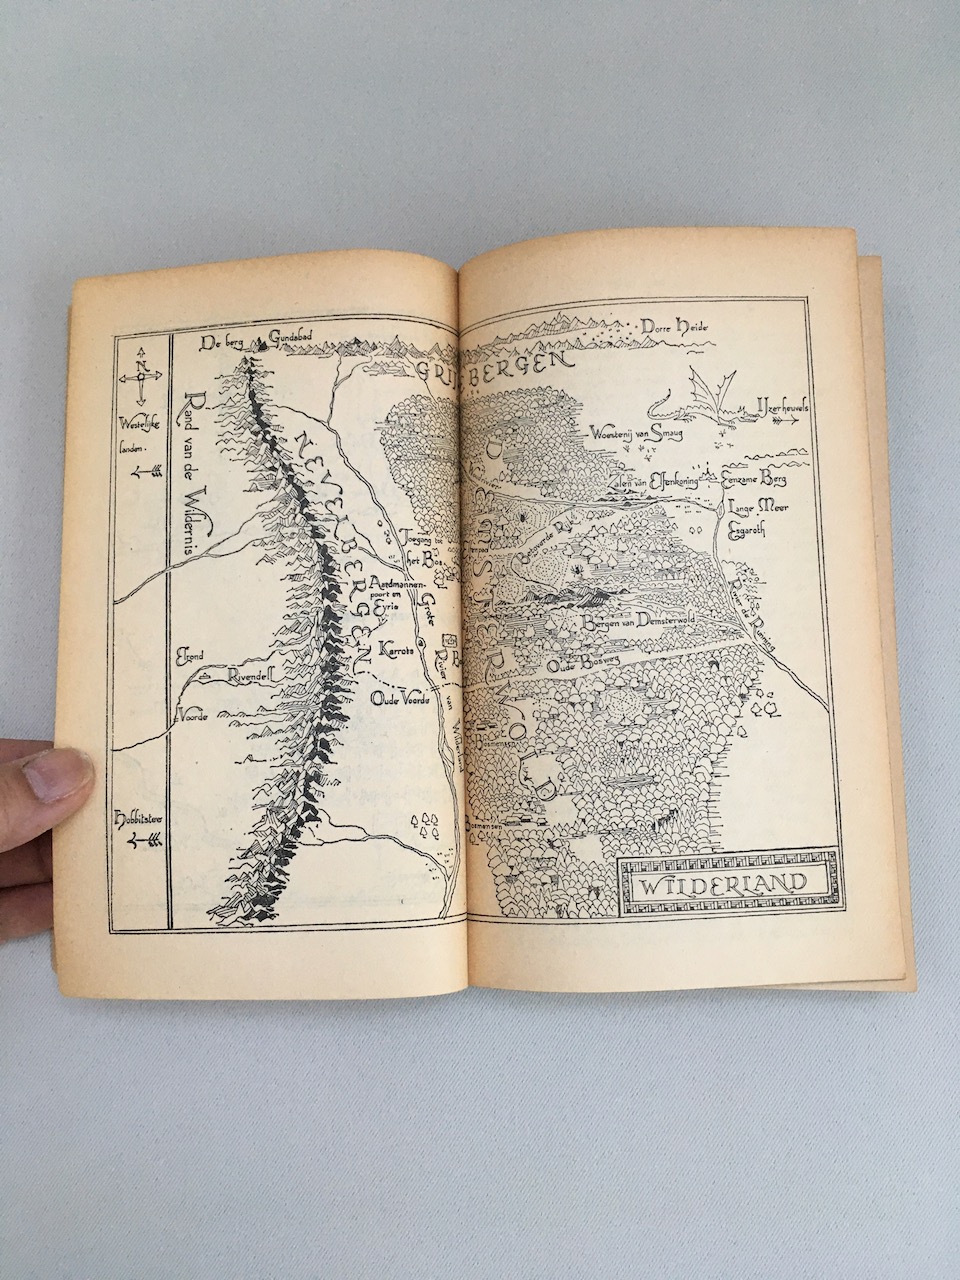 
J.R.R. Tolkien, De Hobbit, Dutch, paperback, 1960, 1st printing 11